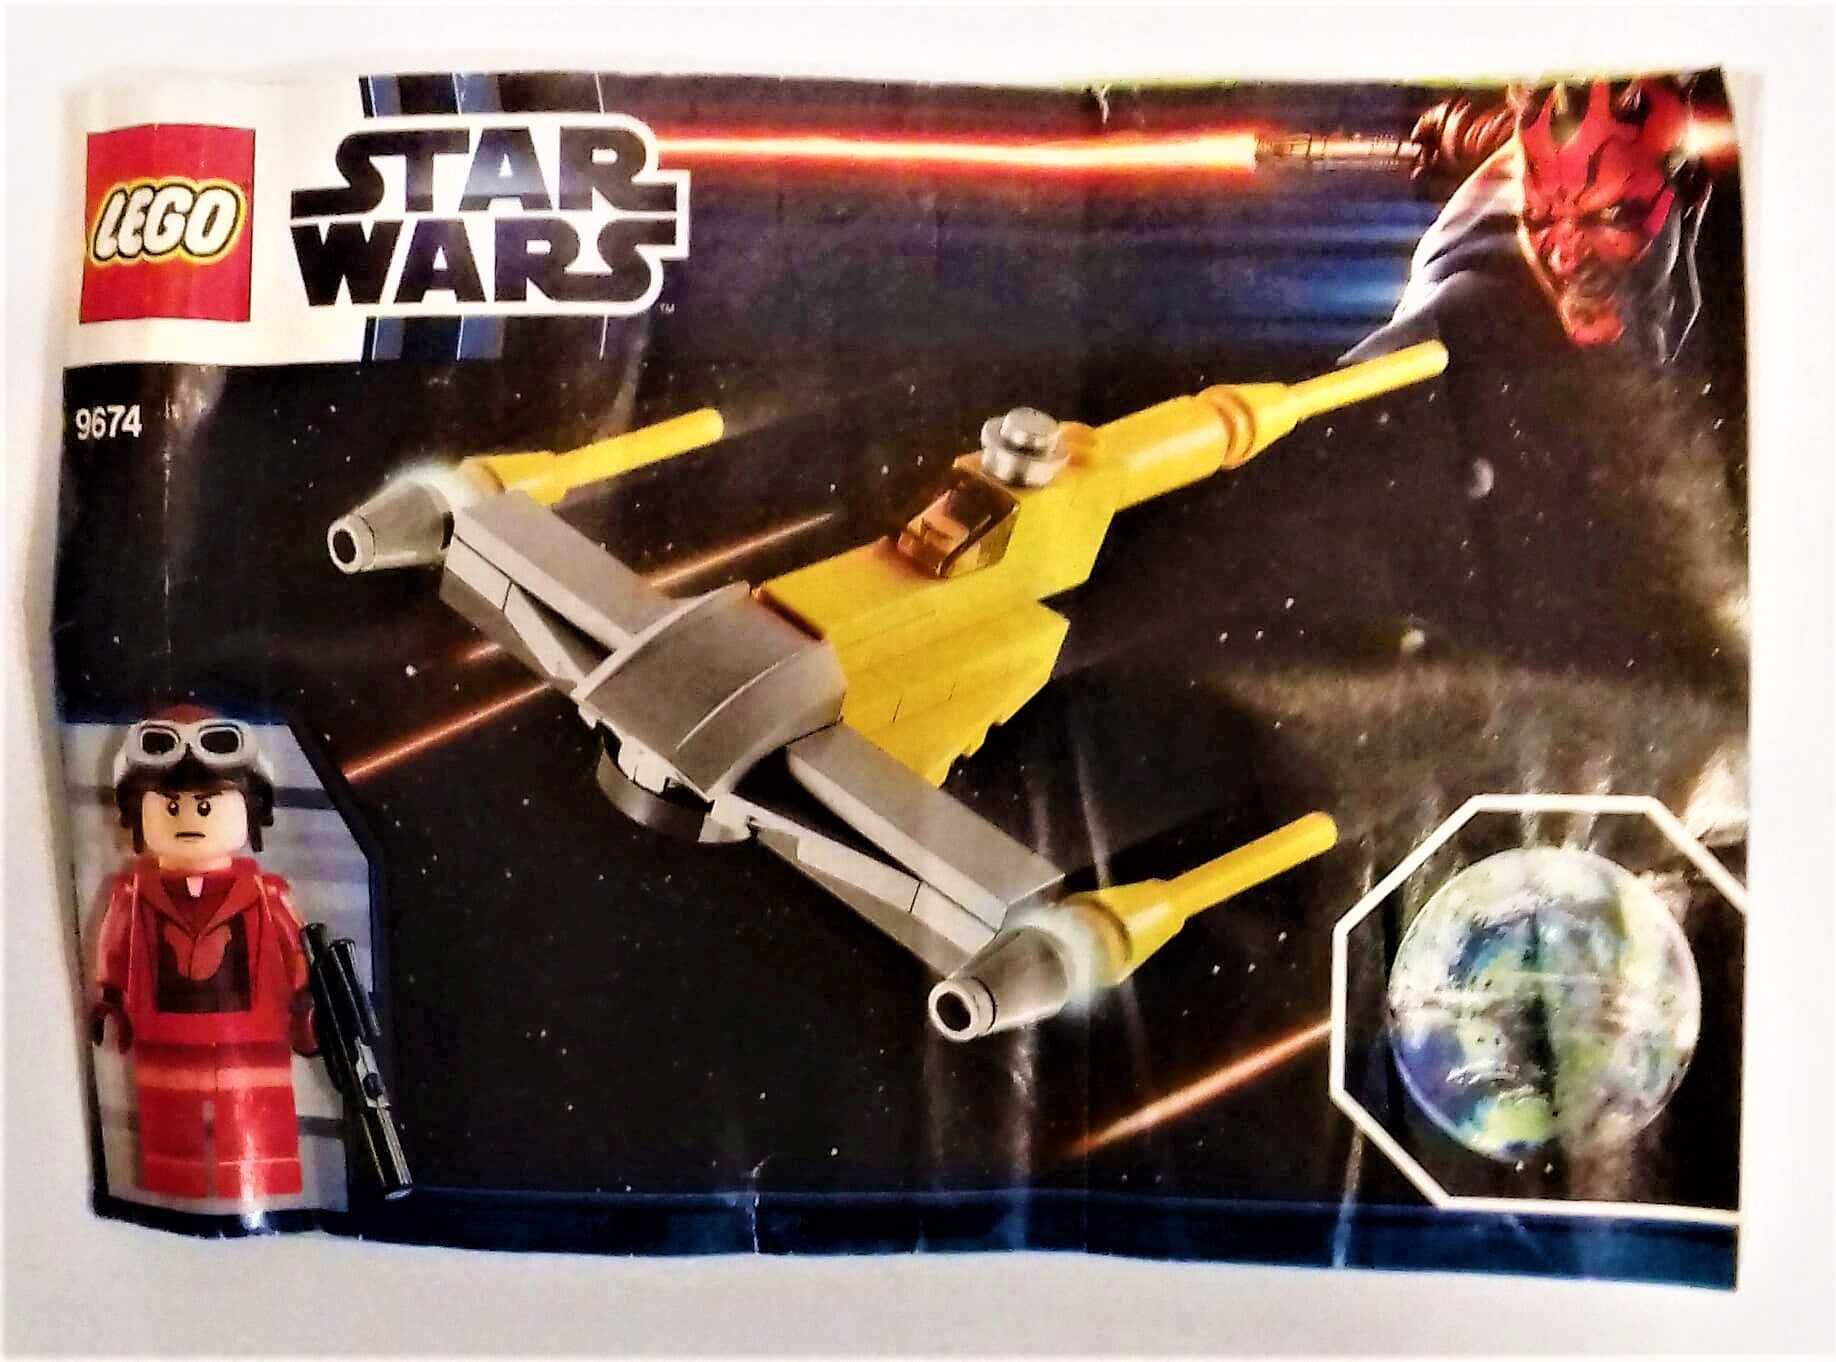 LEGO Star Wars Naboo Starfighter and Naboo cod 9674